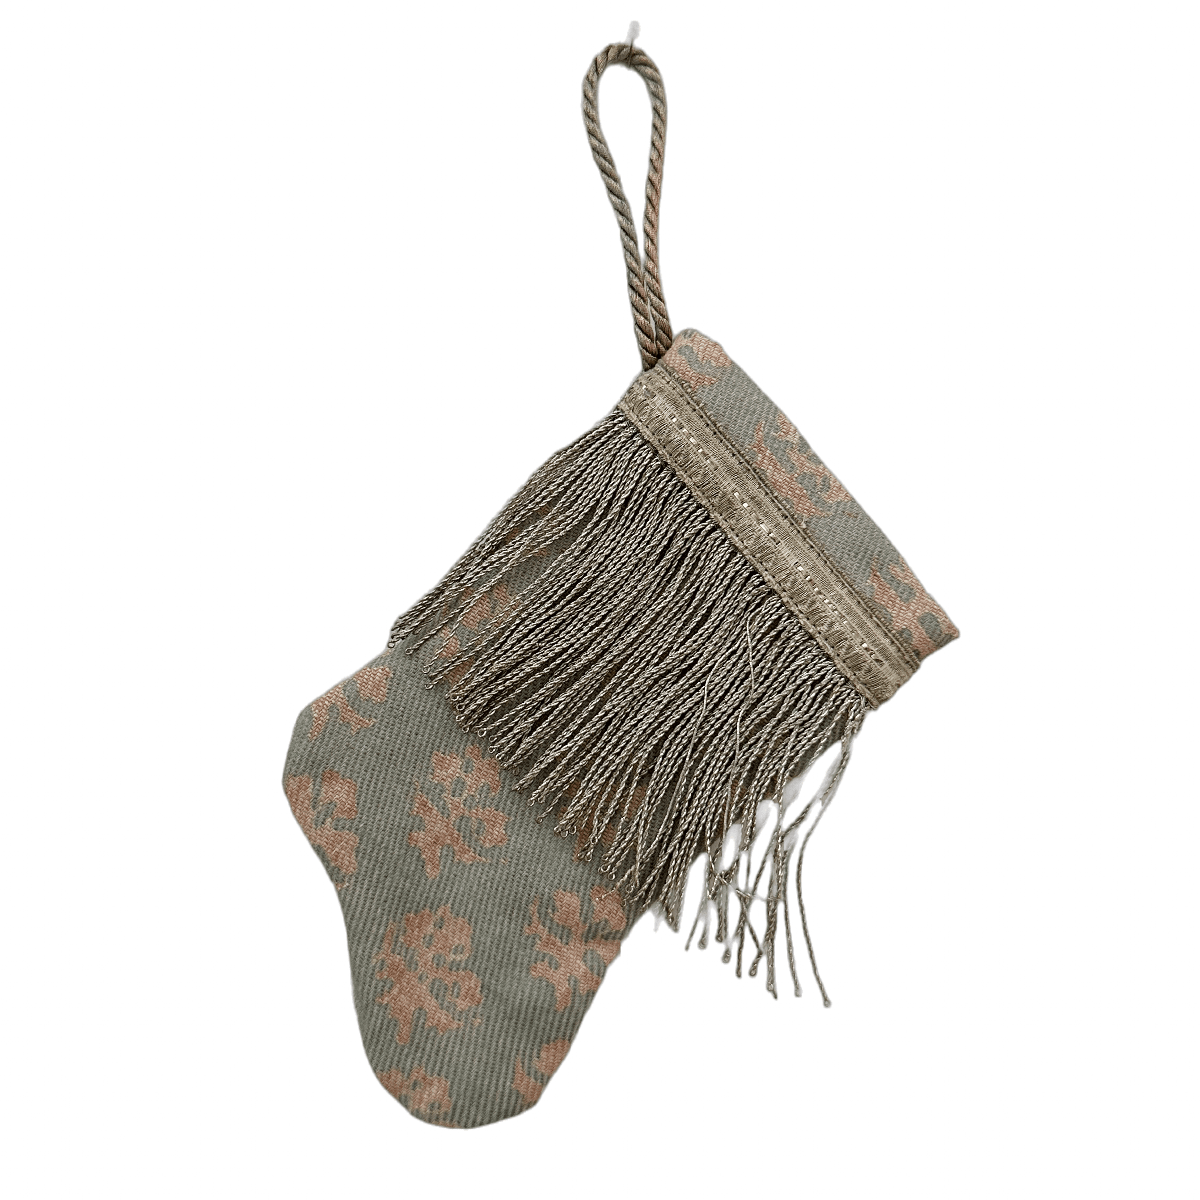 Handmade Mini Stocking Ornament from Antique & Vintage Textiles, Trims | Mint Fortuny Ornament B. Viz Design G 